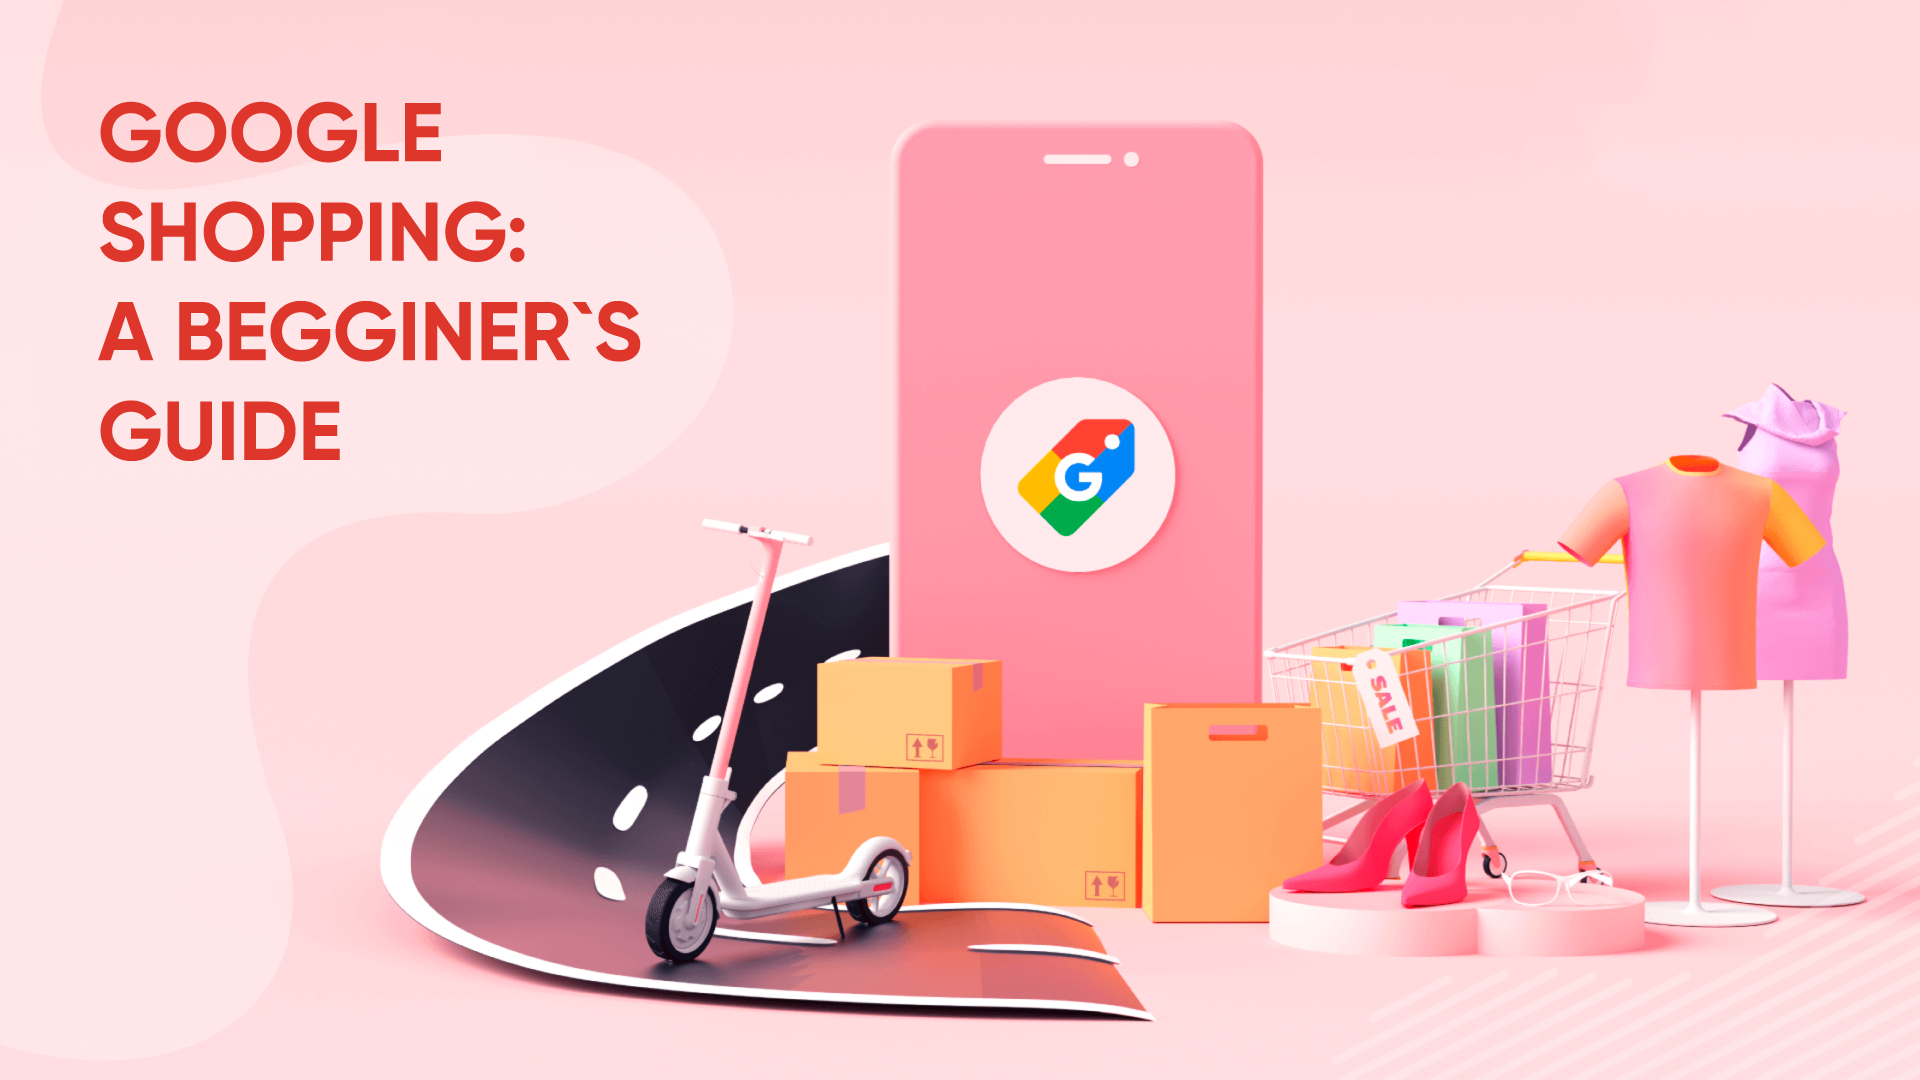 Google Shopping: a beginner’s guide